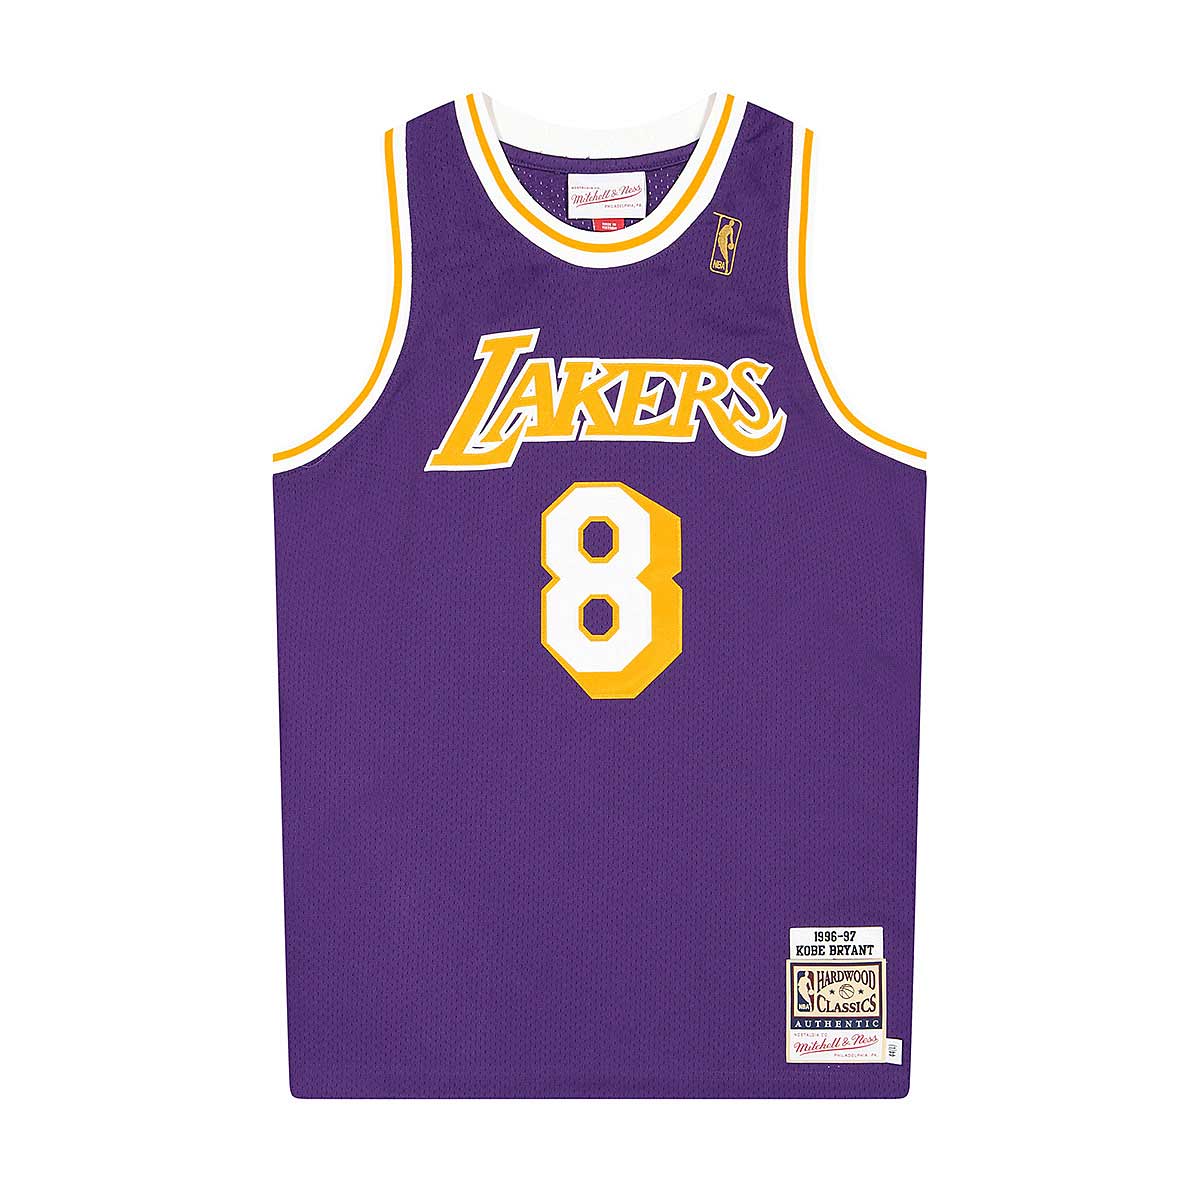 authentic Kobe Bryant #8 LA Lakers Warm Up Jersey/Shorts Team Nike Nice